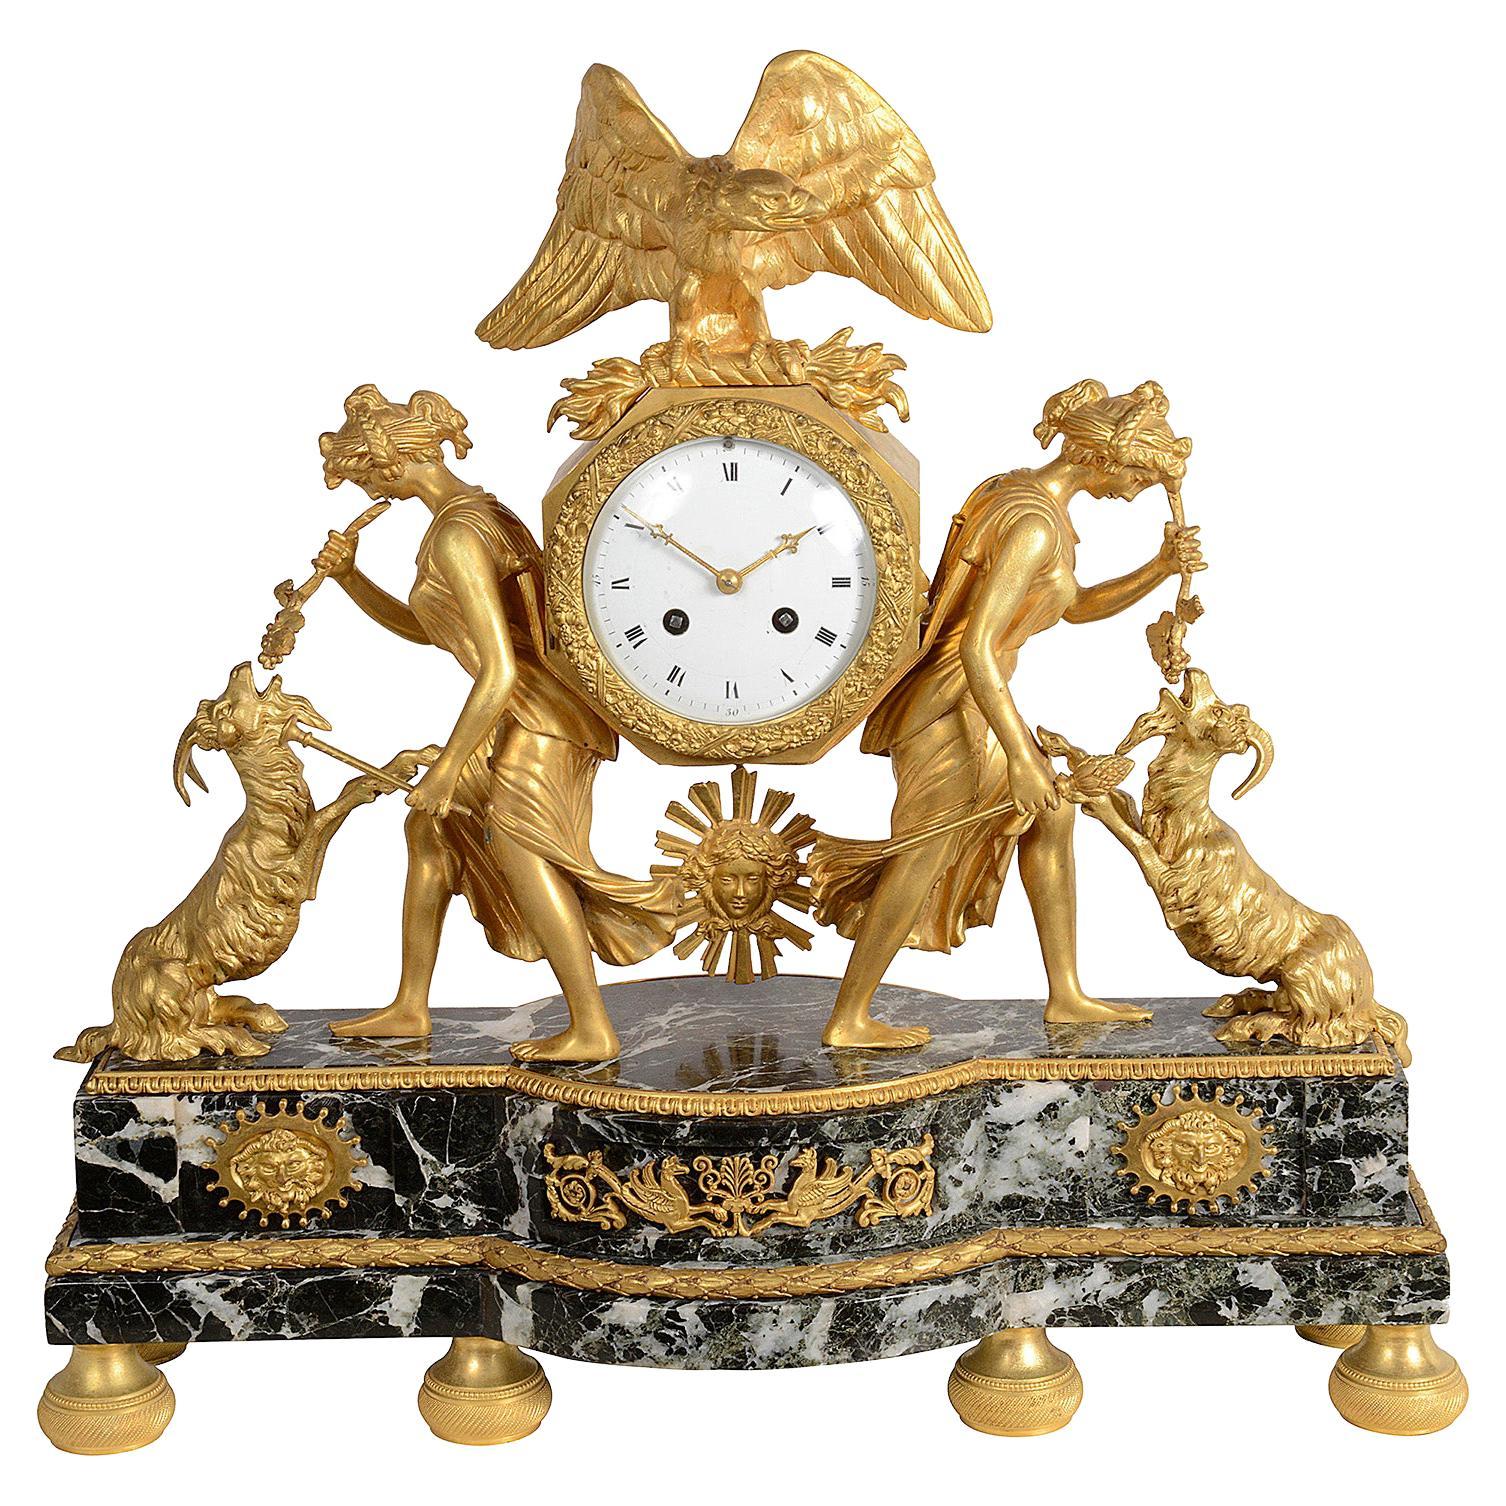 French Empire Style Mantel Clock, circa 1820